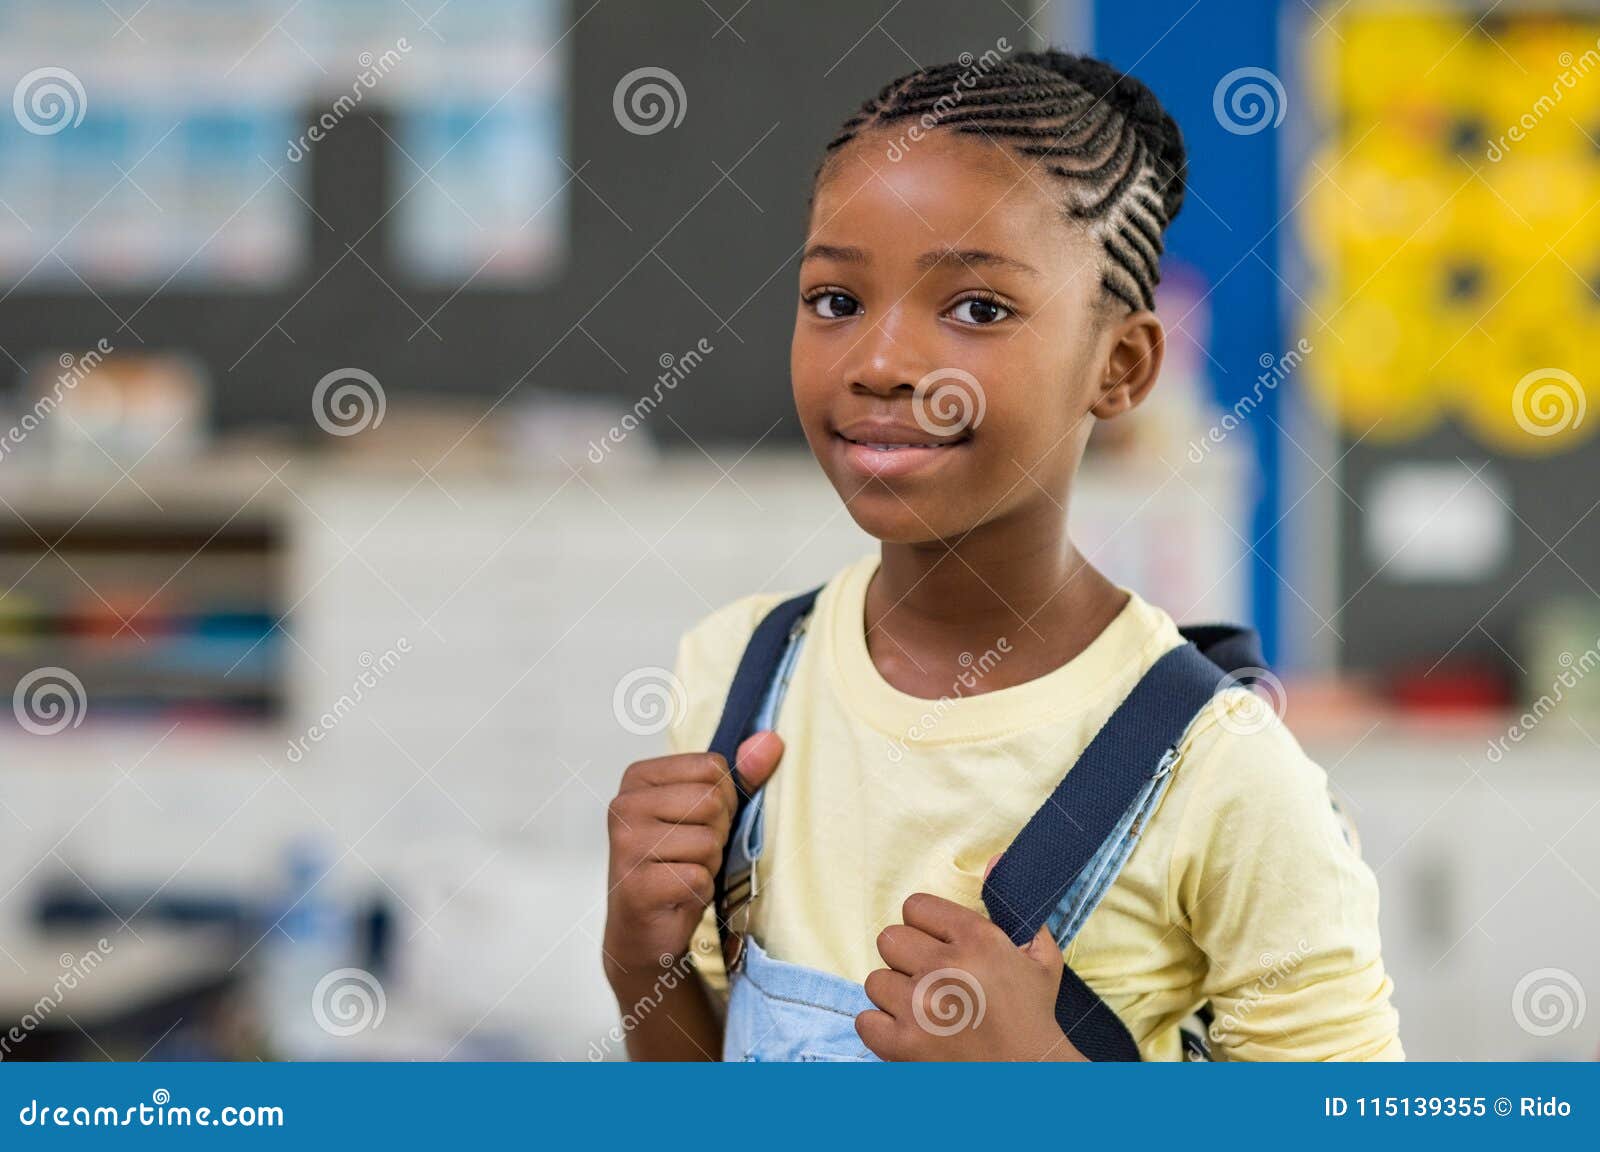 girl wearing backpack at school